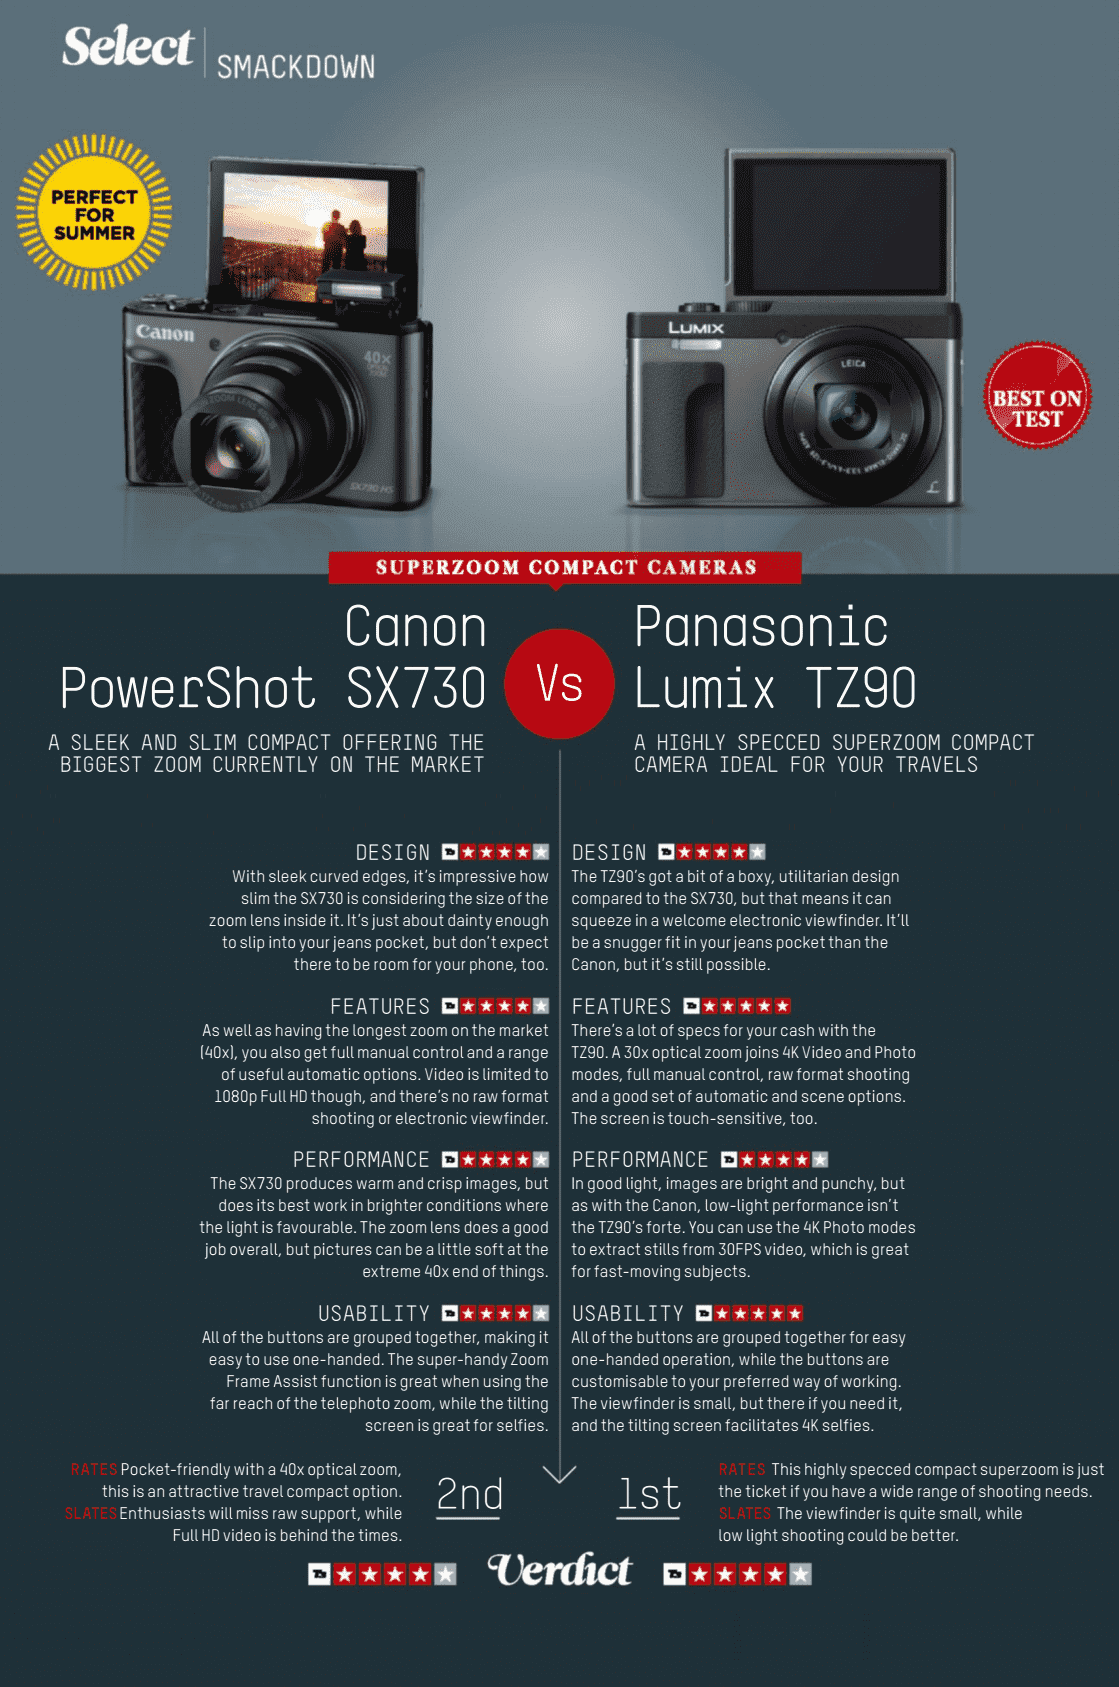 canon Powershot sX730 vs Panasonic lumix tz90